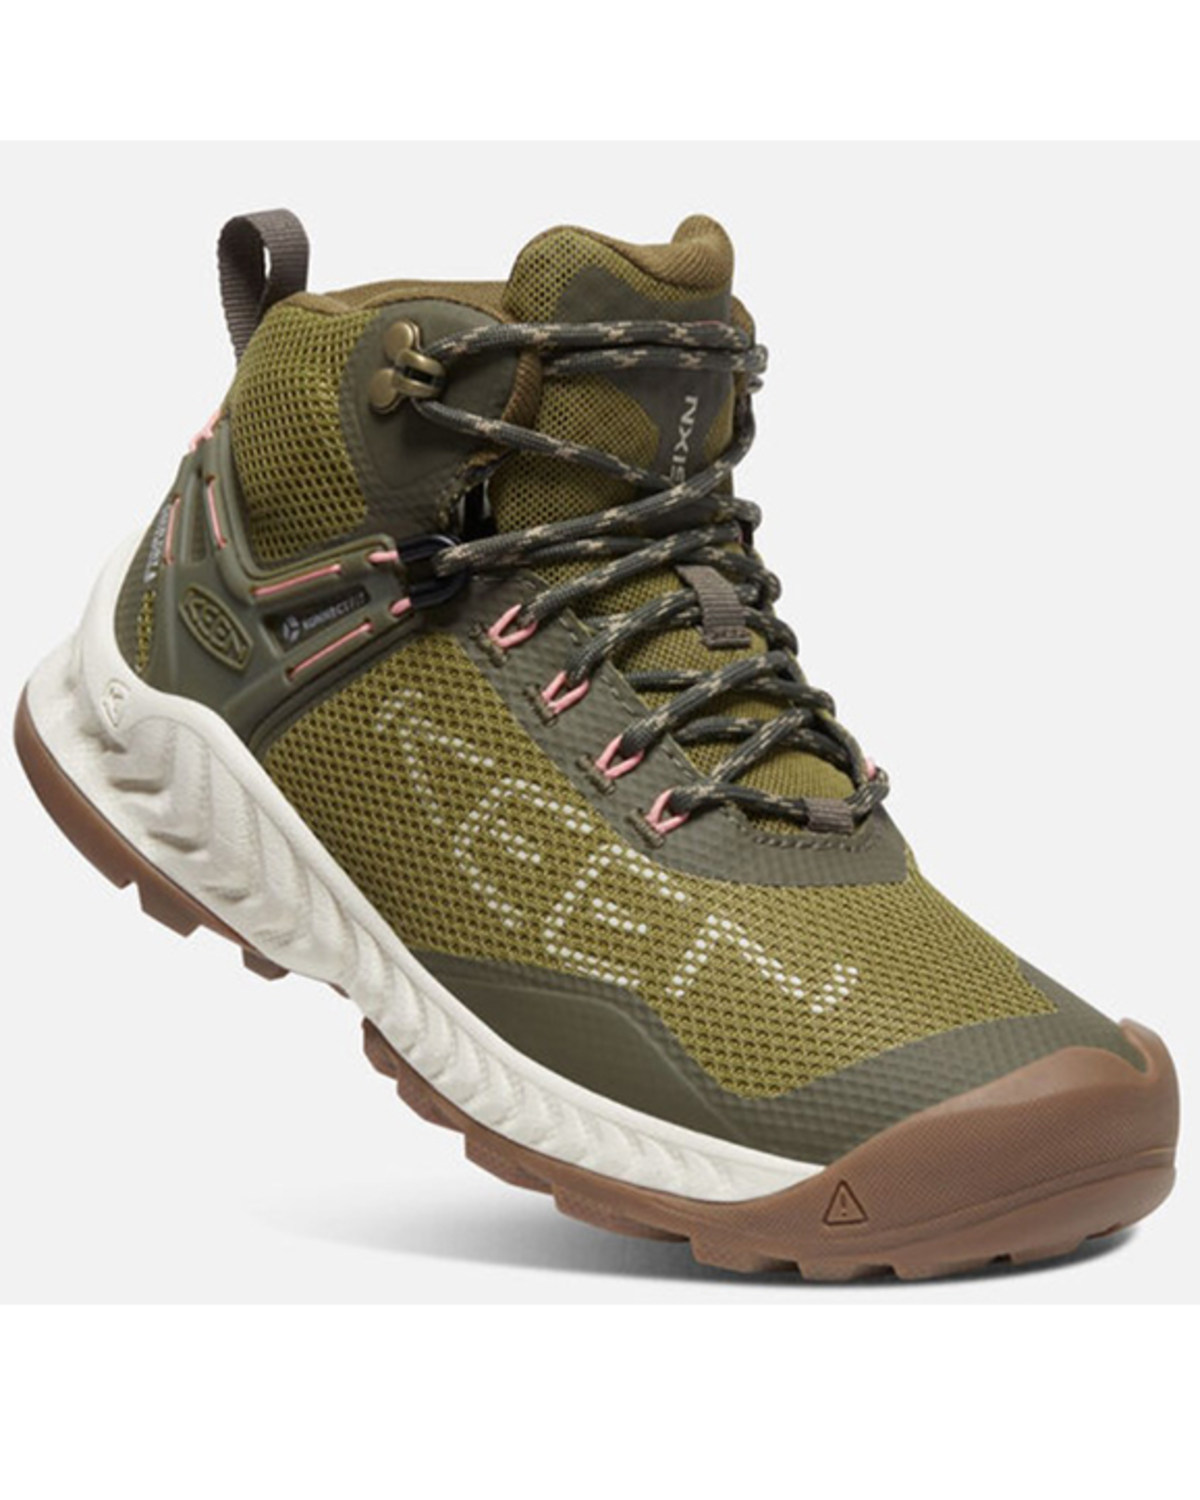 Keen Women's NXIS EVO Waterproof Hiking Boots